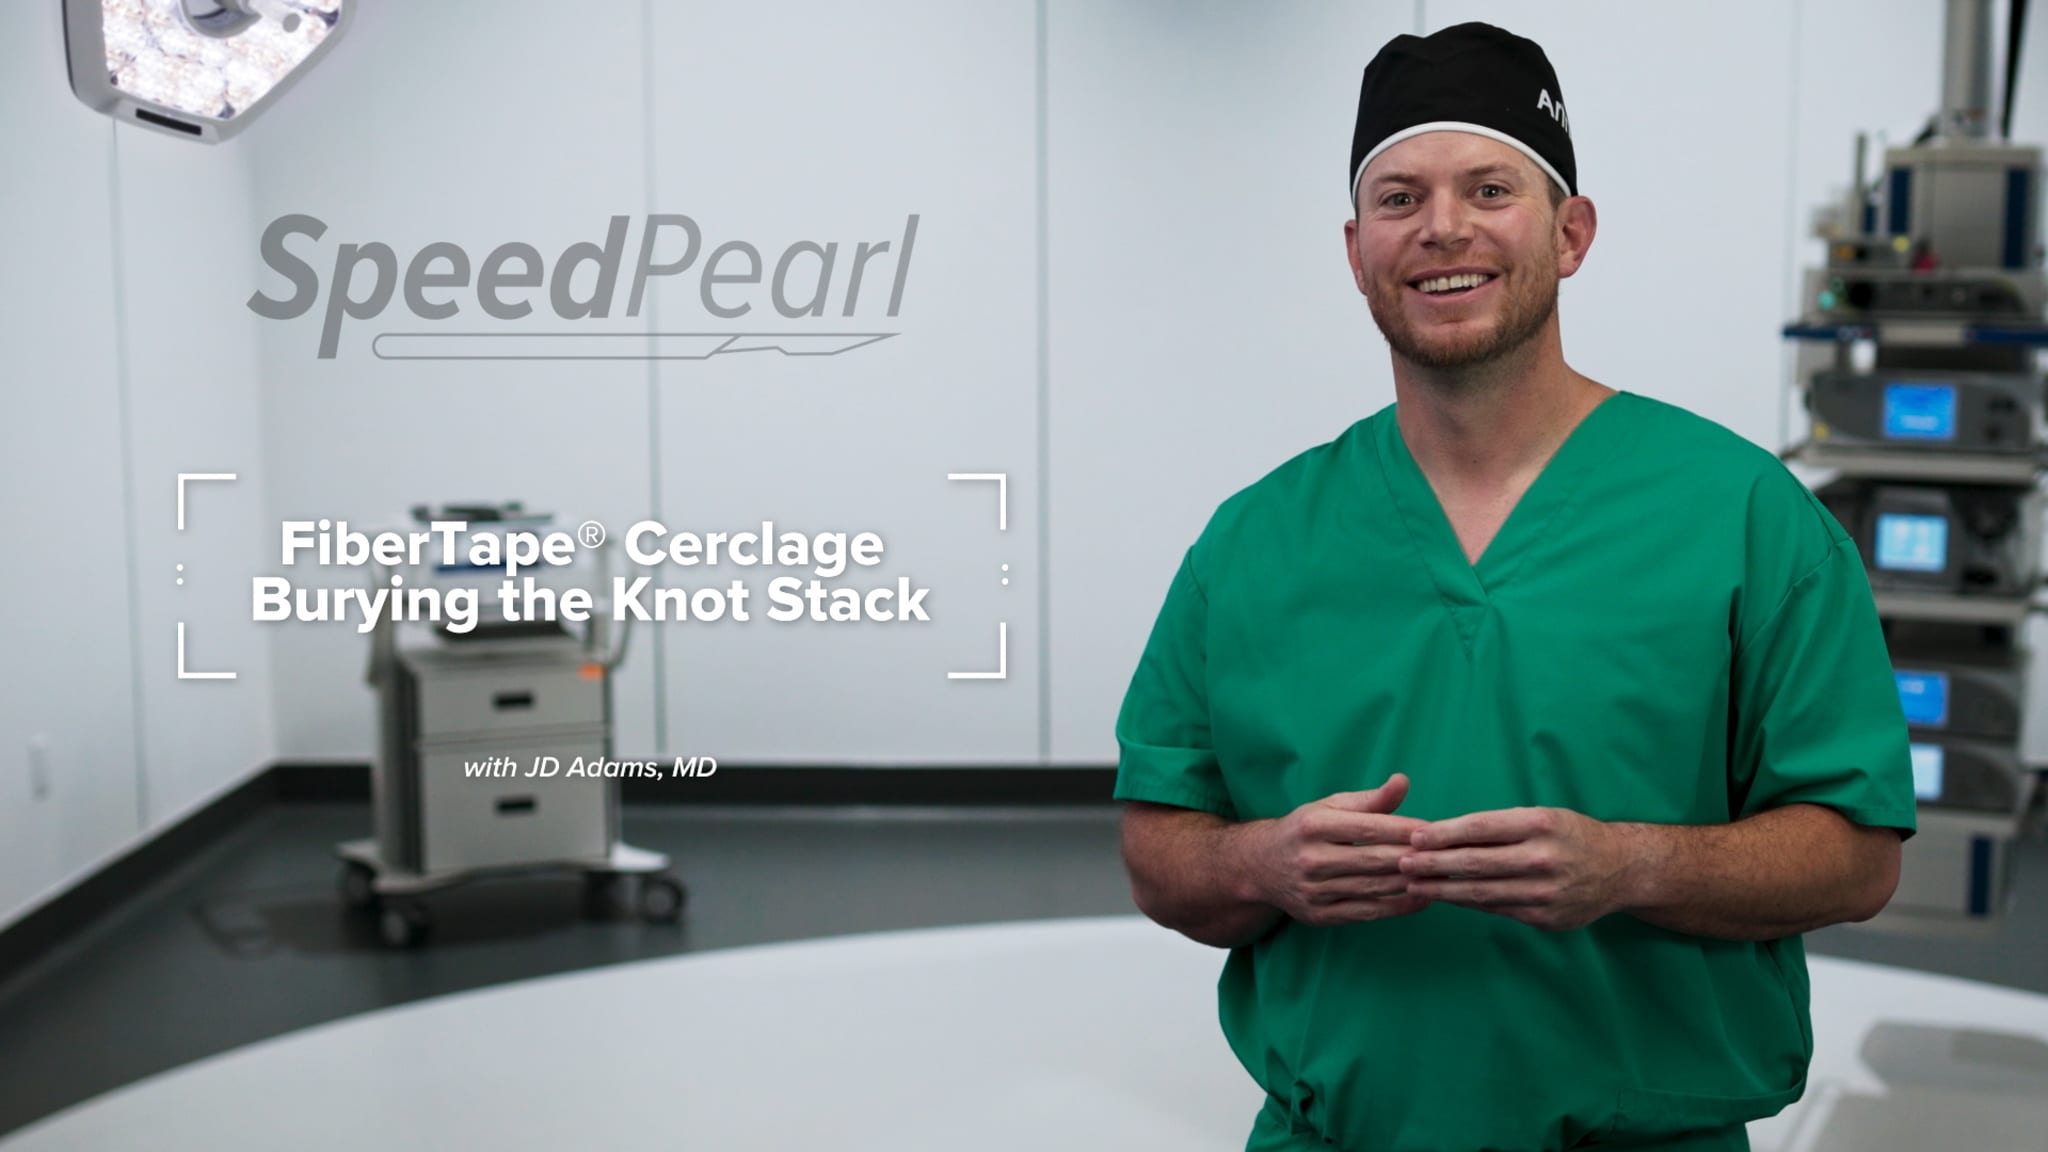 SpeedPearl: FiberTape® Cerclage—Burying the Knot Stack